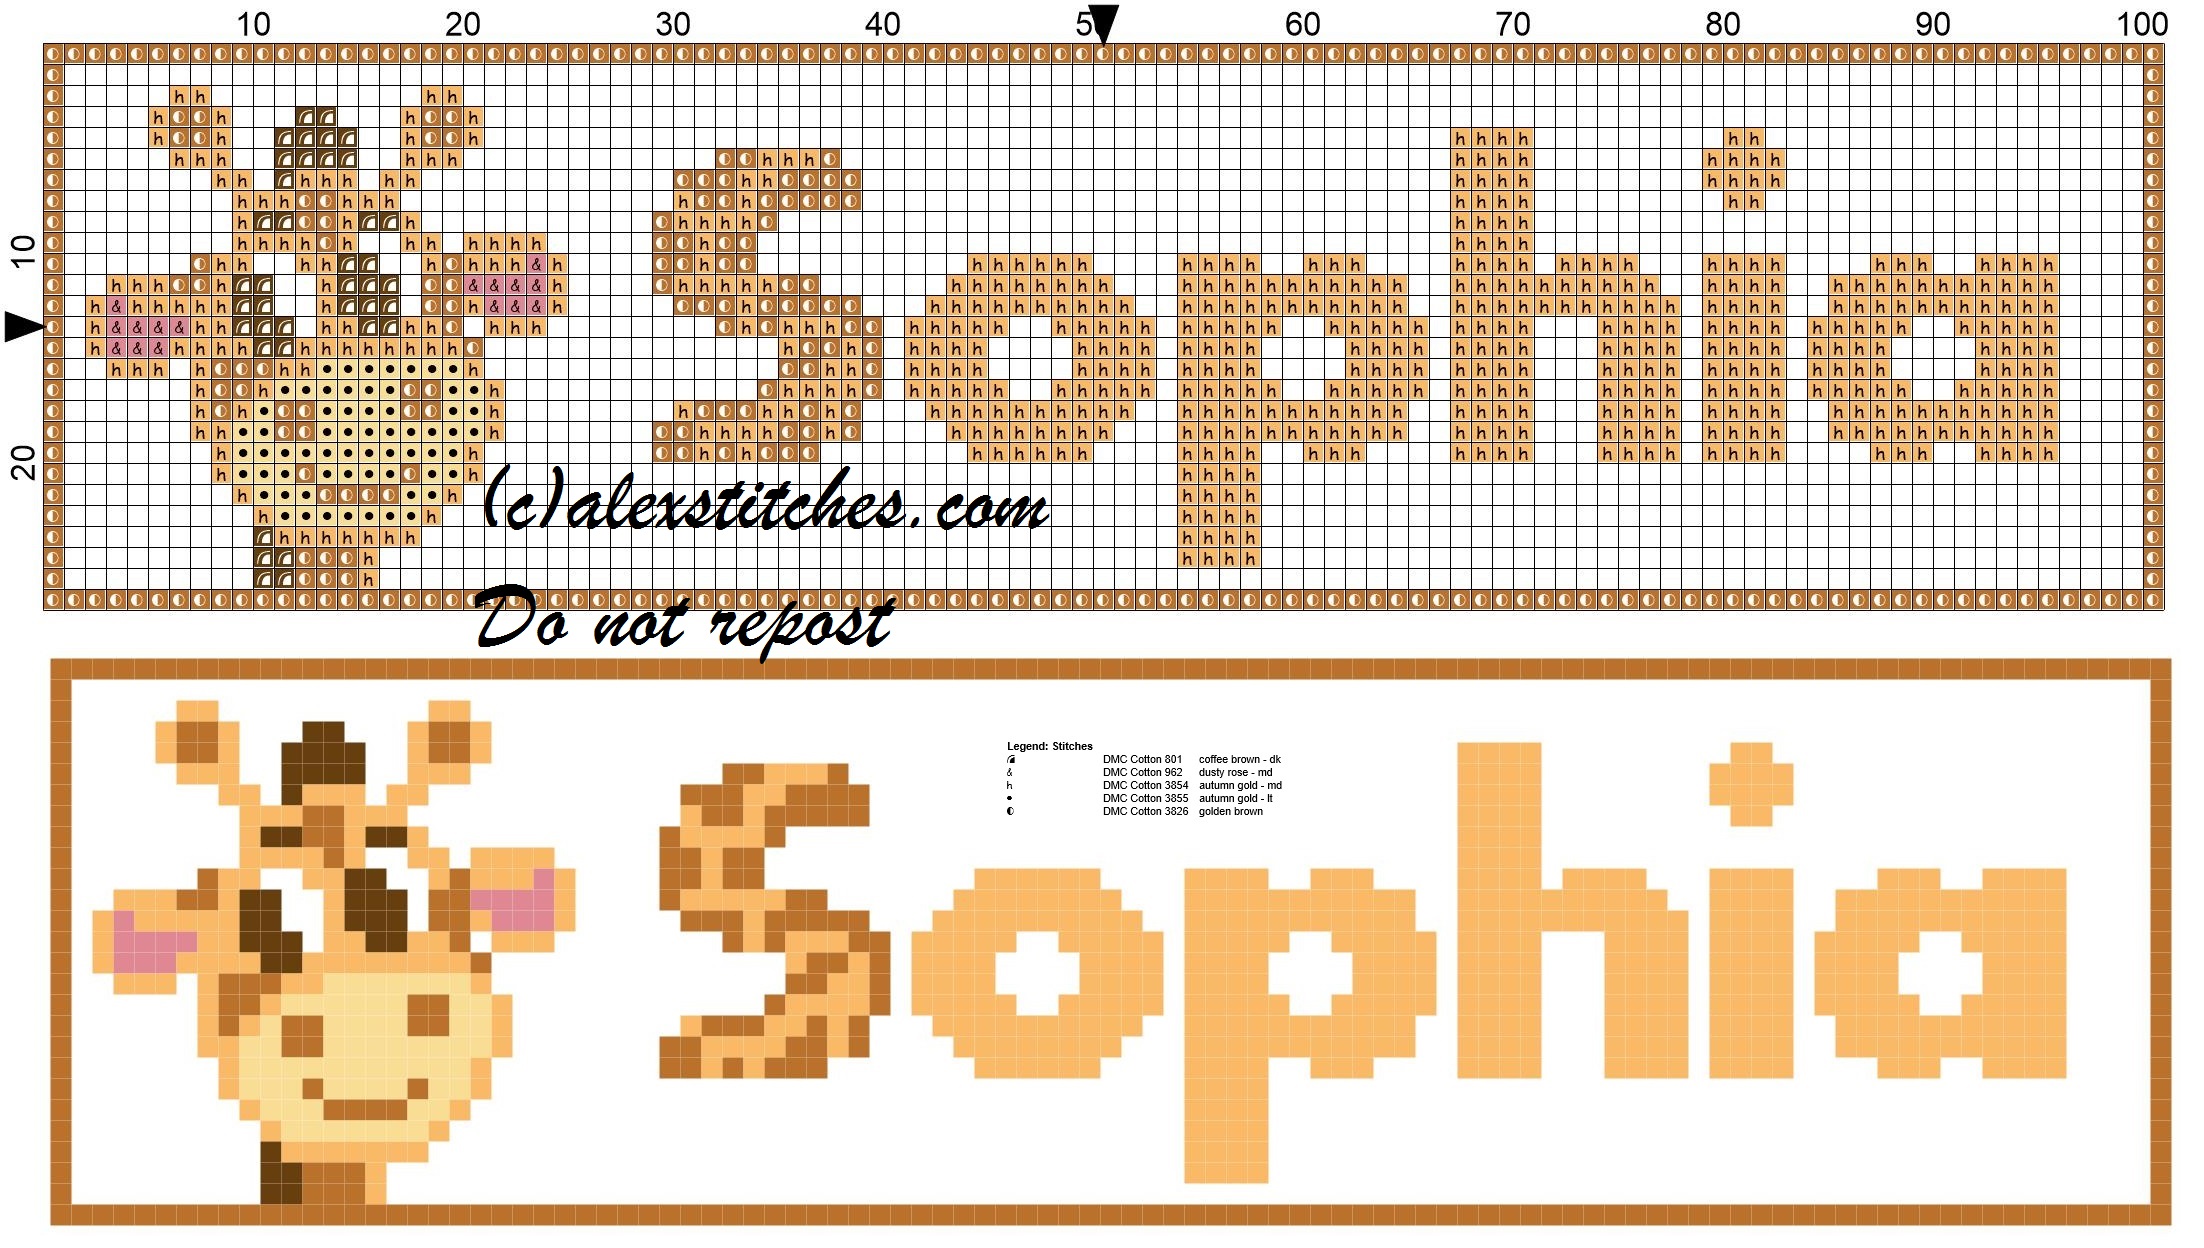 Sophia name with giraffe cross stitch pattern